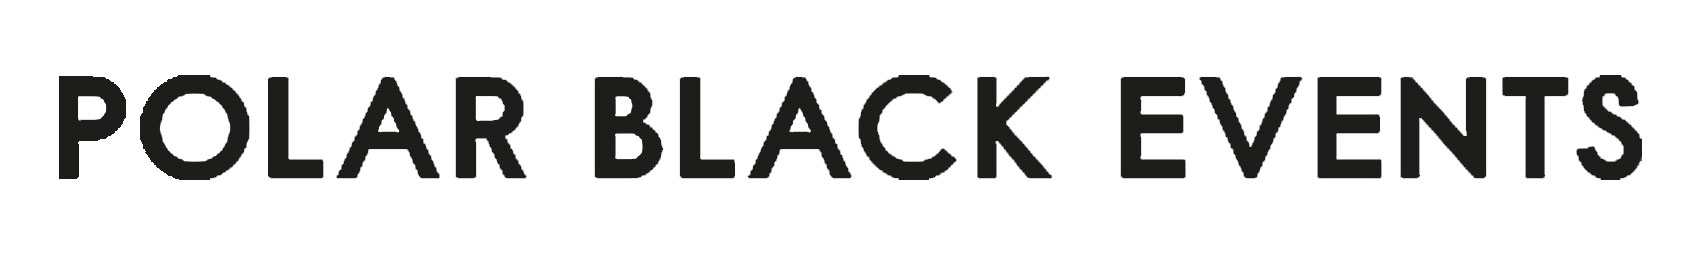 Polar black events logo